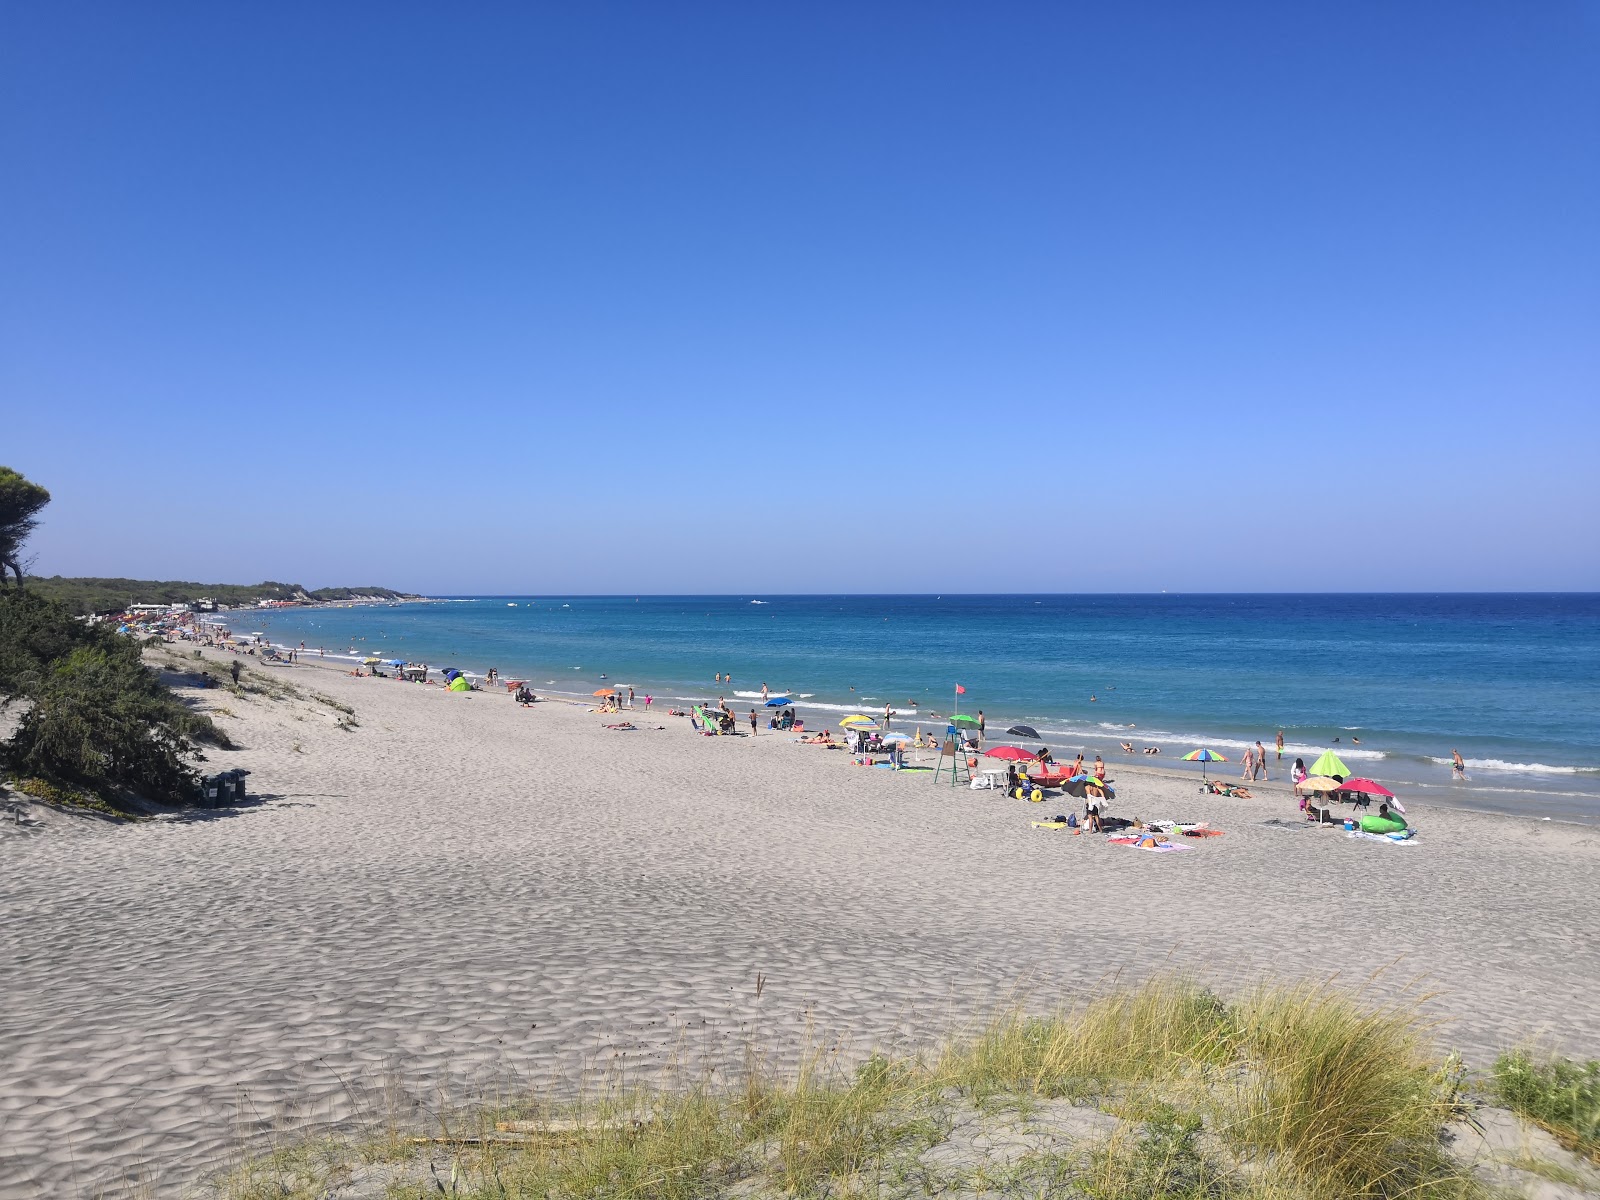 Spiaggia Laghi Alimini'in fotoğrafı plaj tatil beldesi alanı